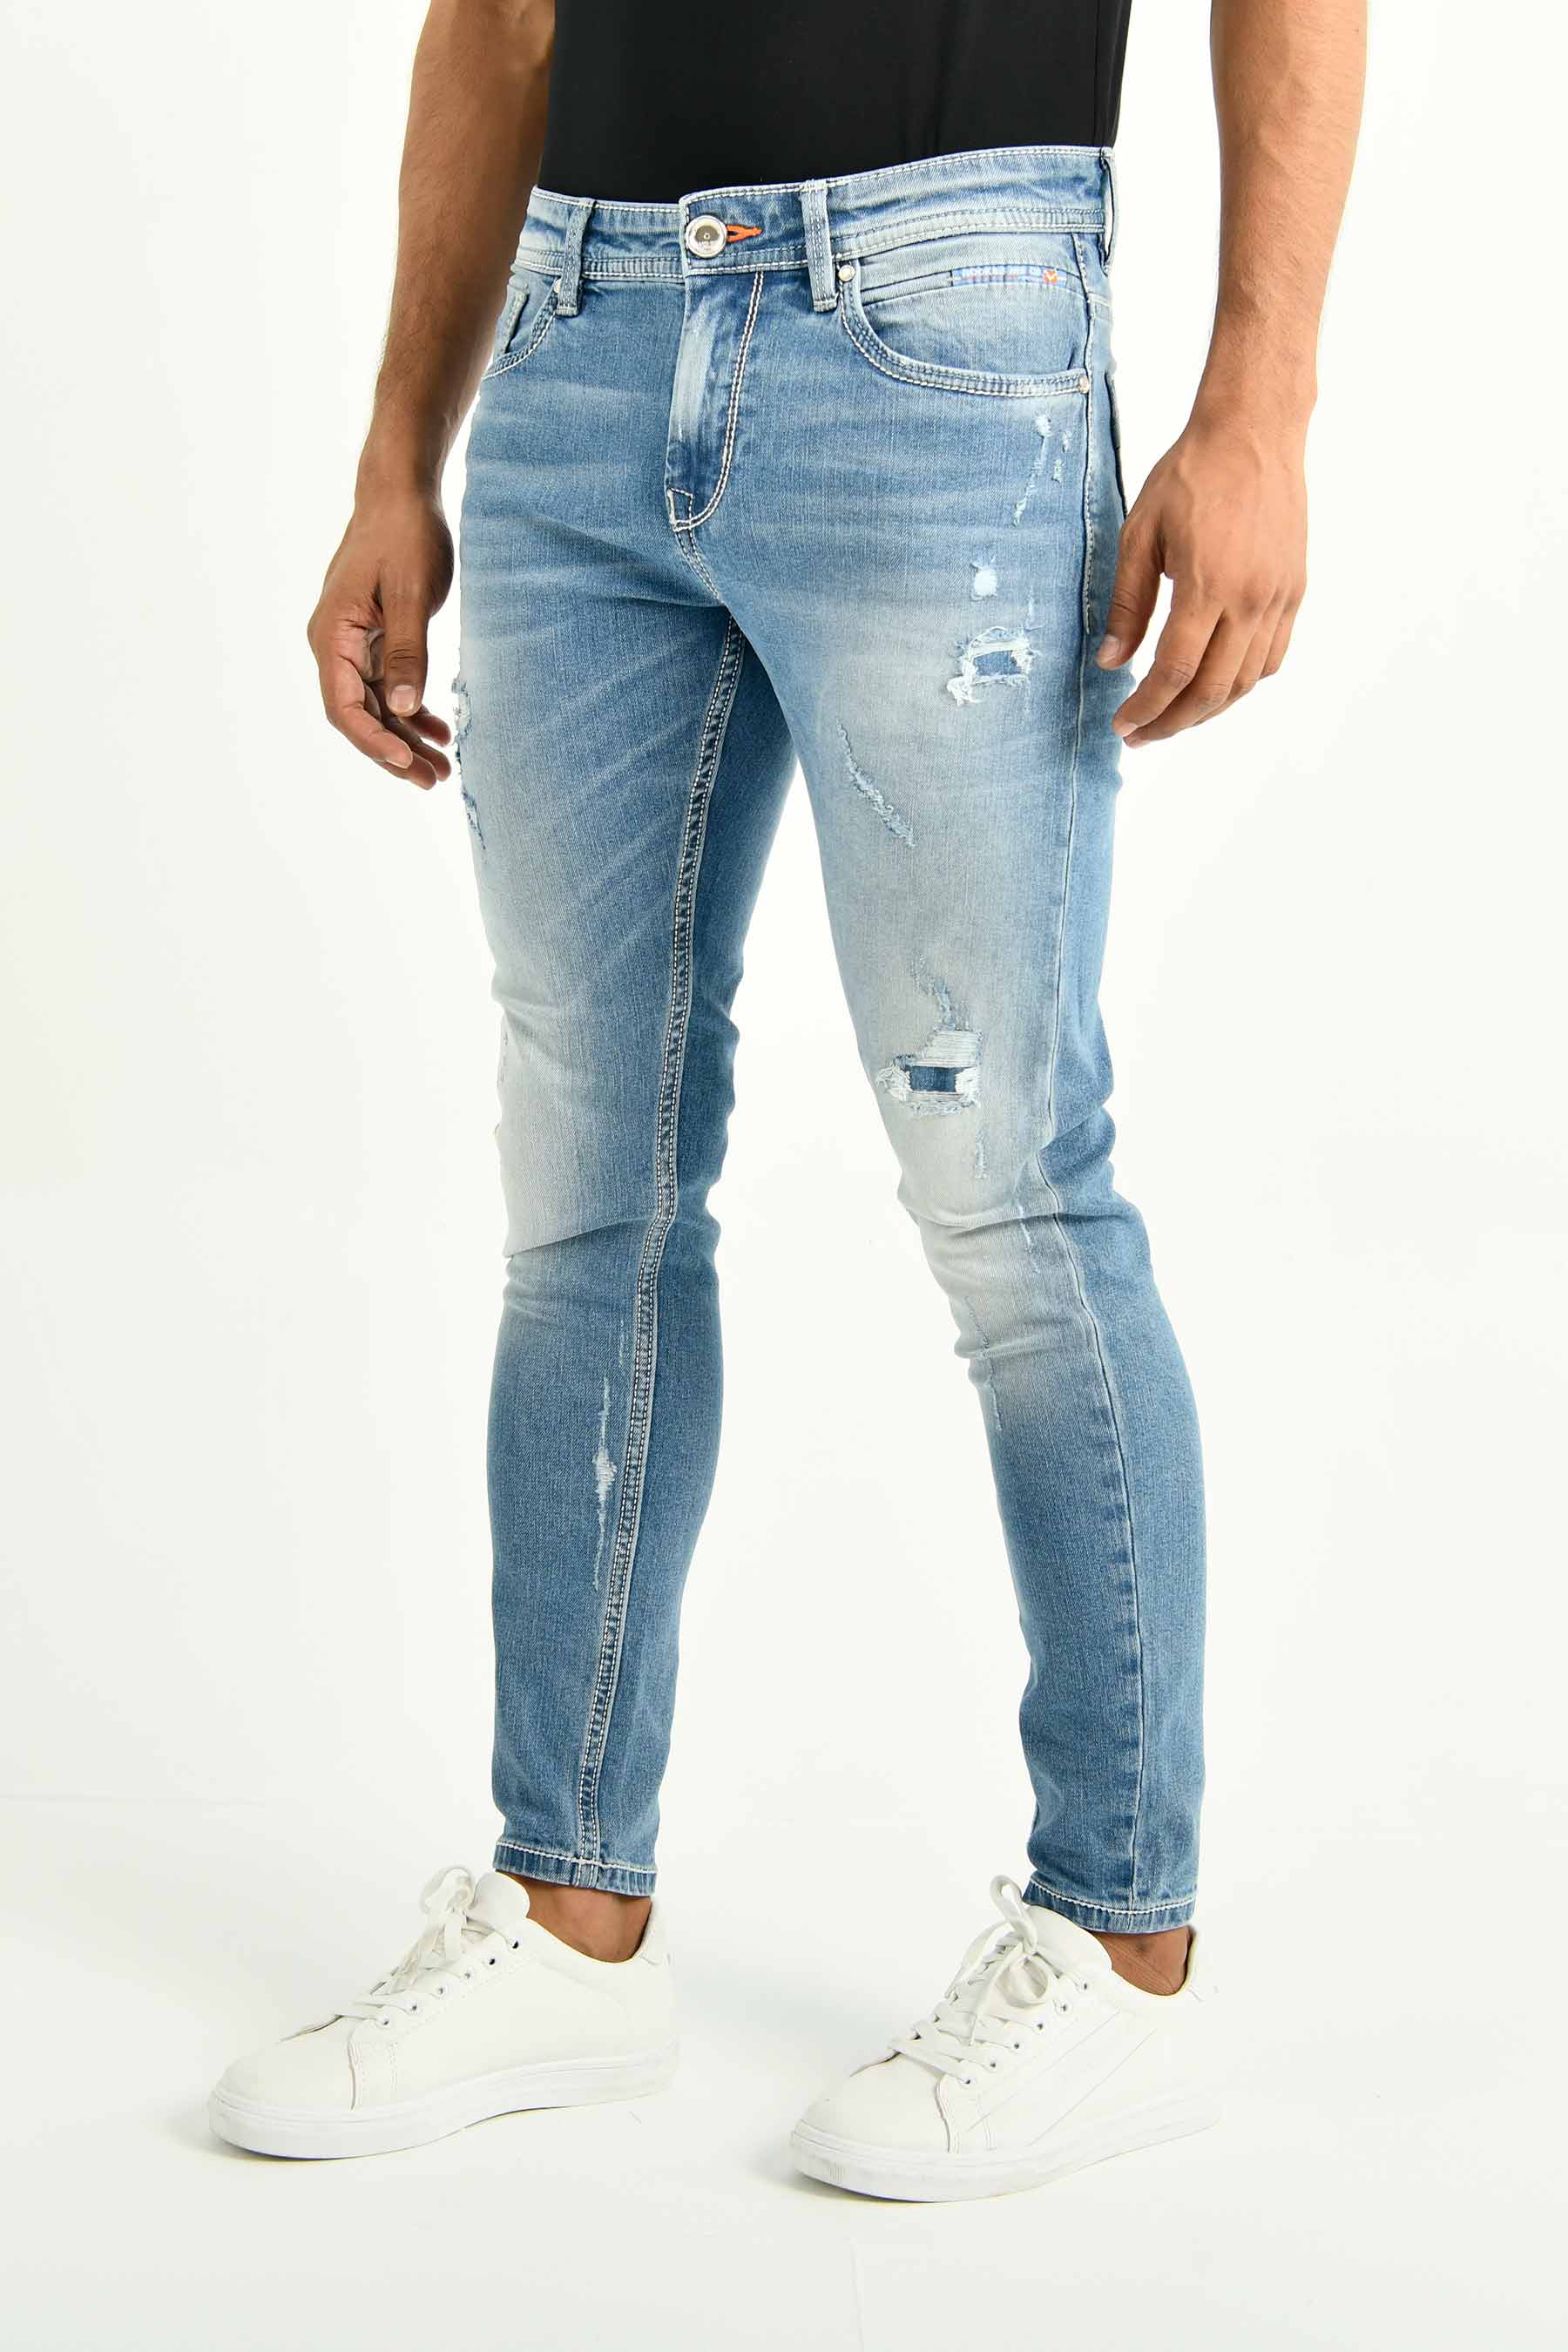 Men’s Denim Jeans- RJ3897